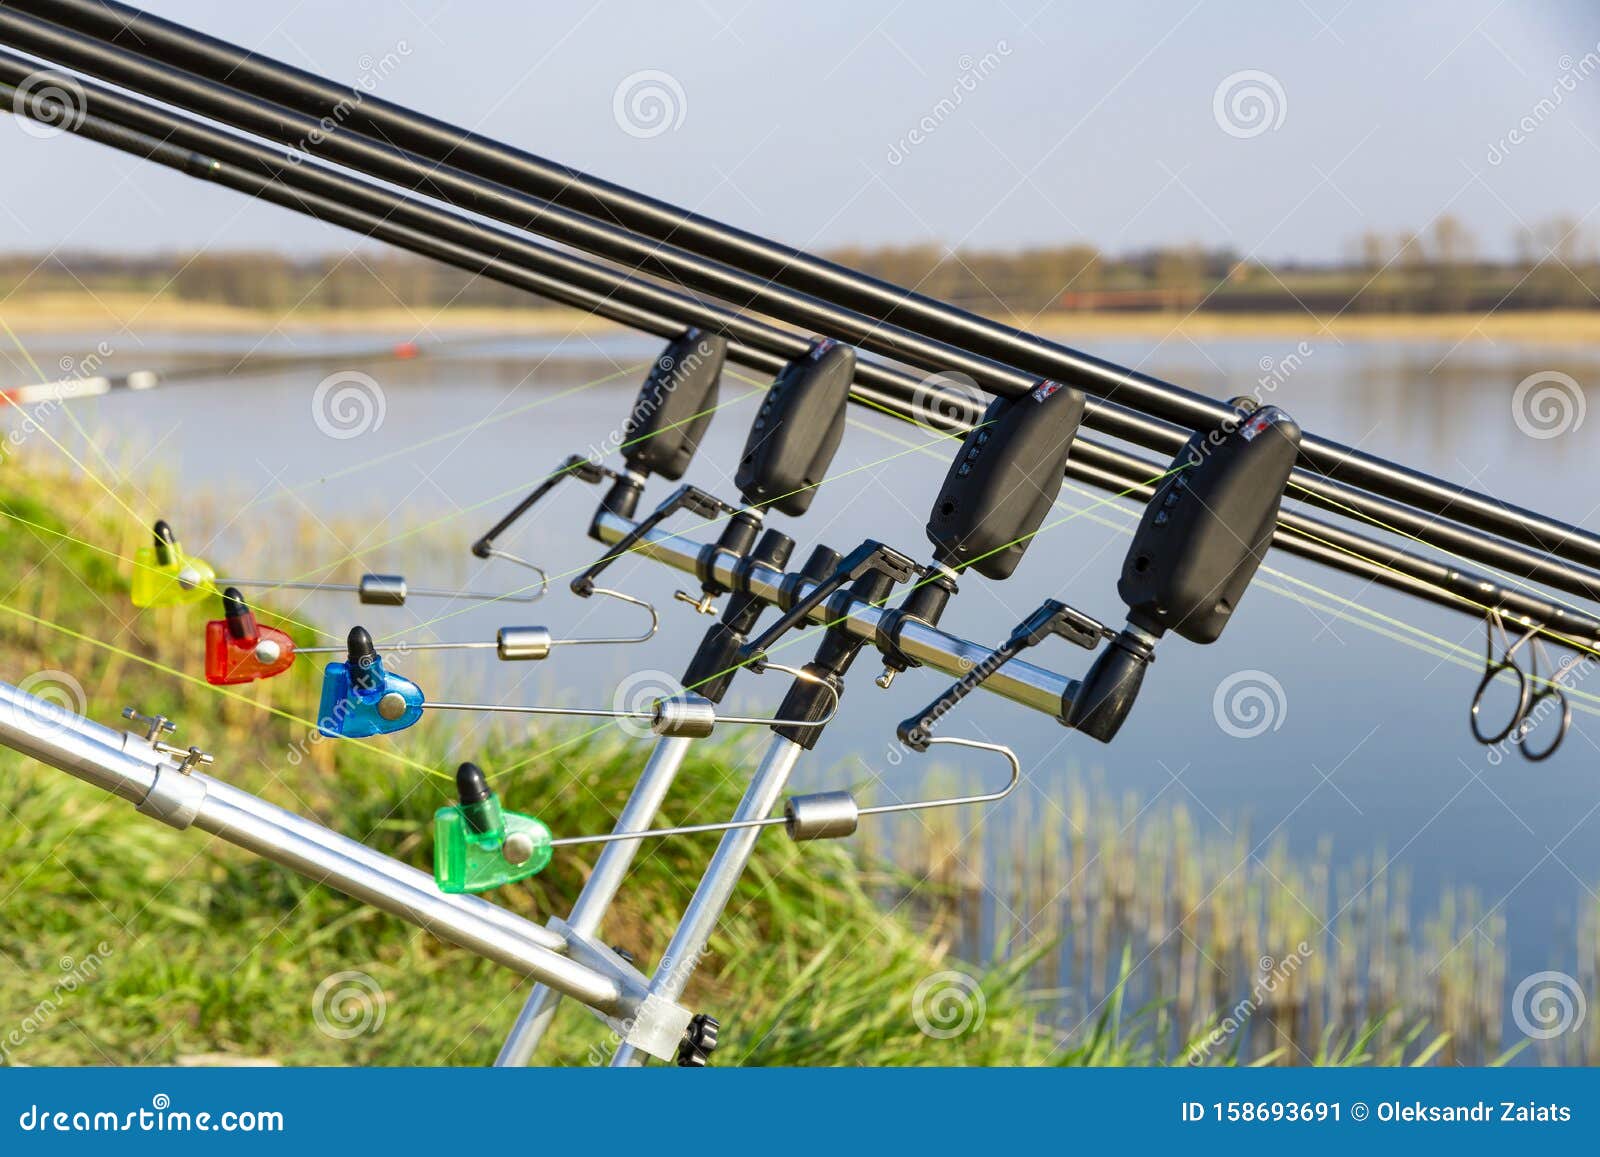 Carp Fishing Rods with Carp Bite Indicators Set Up on Rod Pod Near